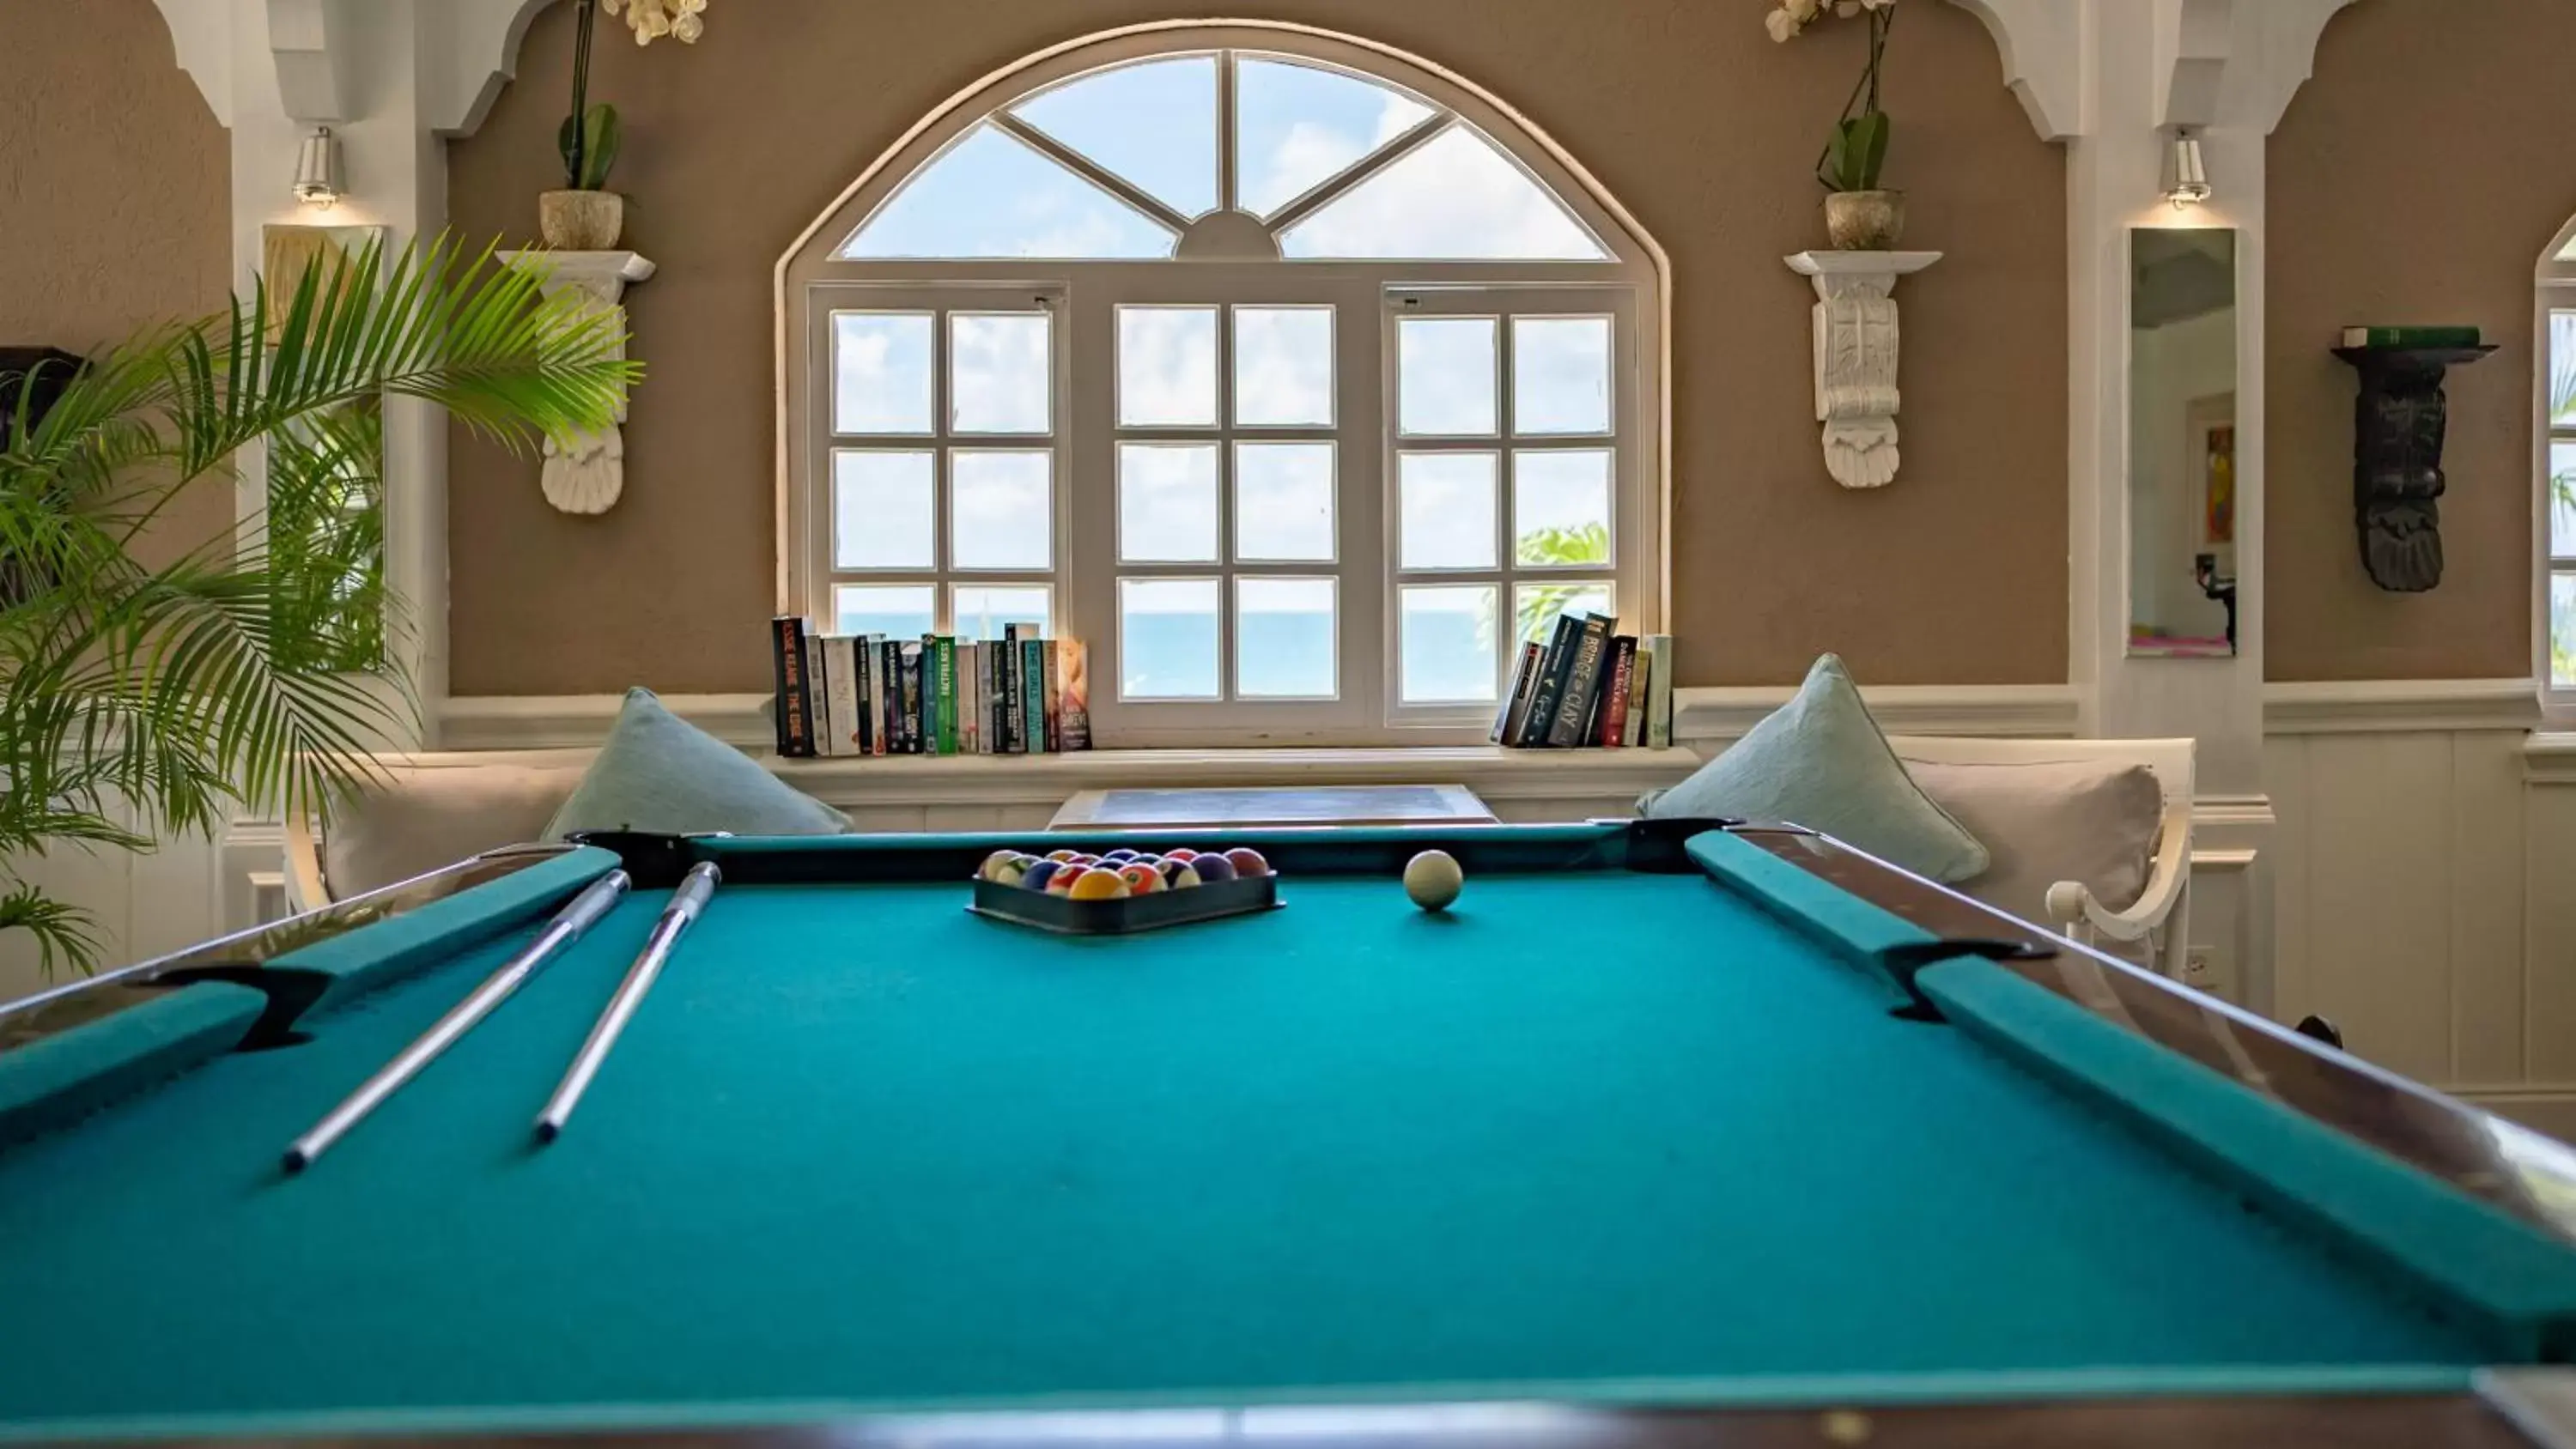 Game Room, Billiards in Blue Waters Resort and Spa